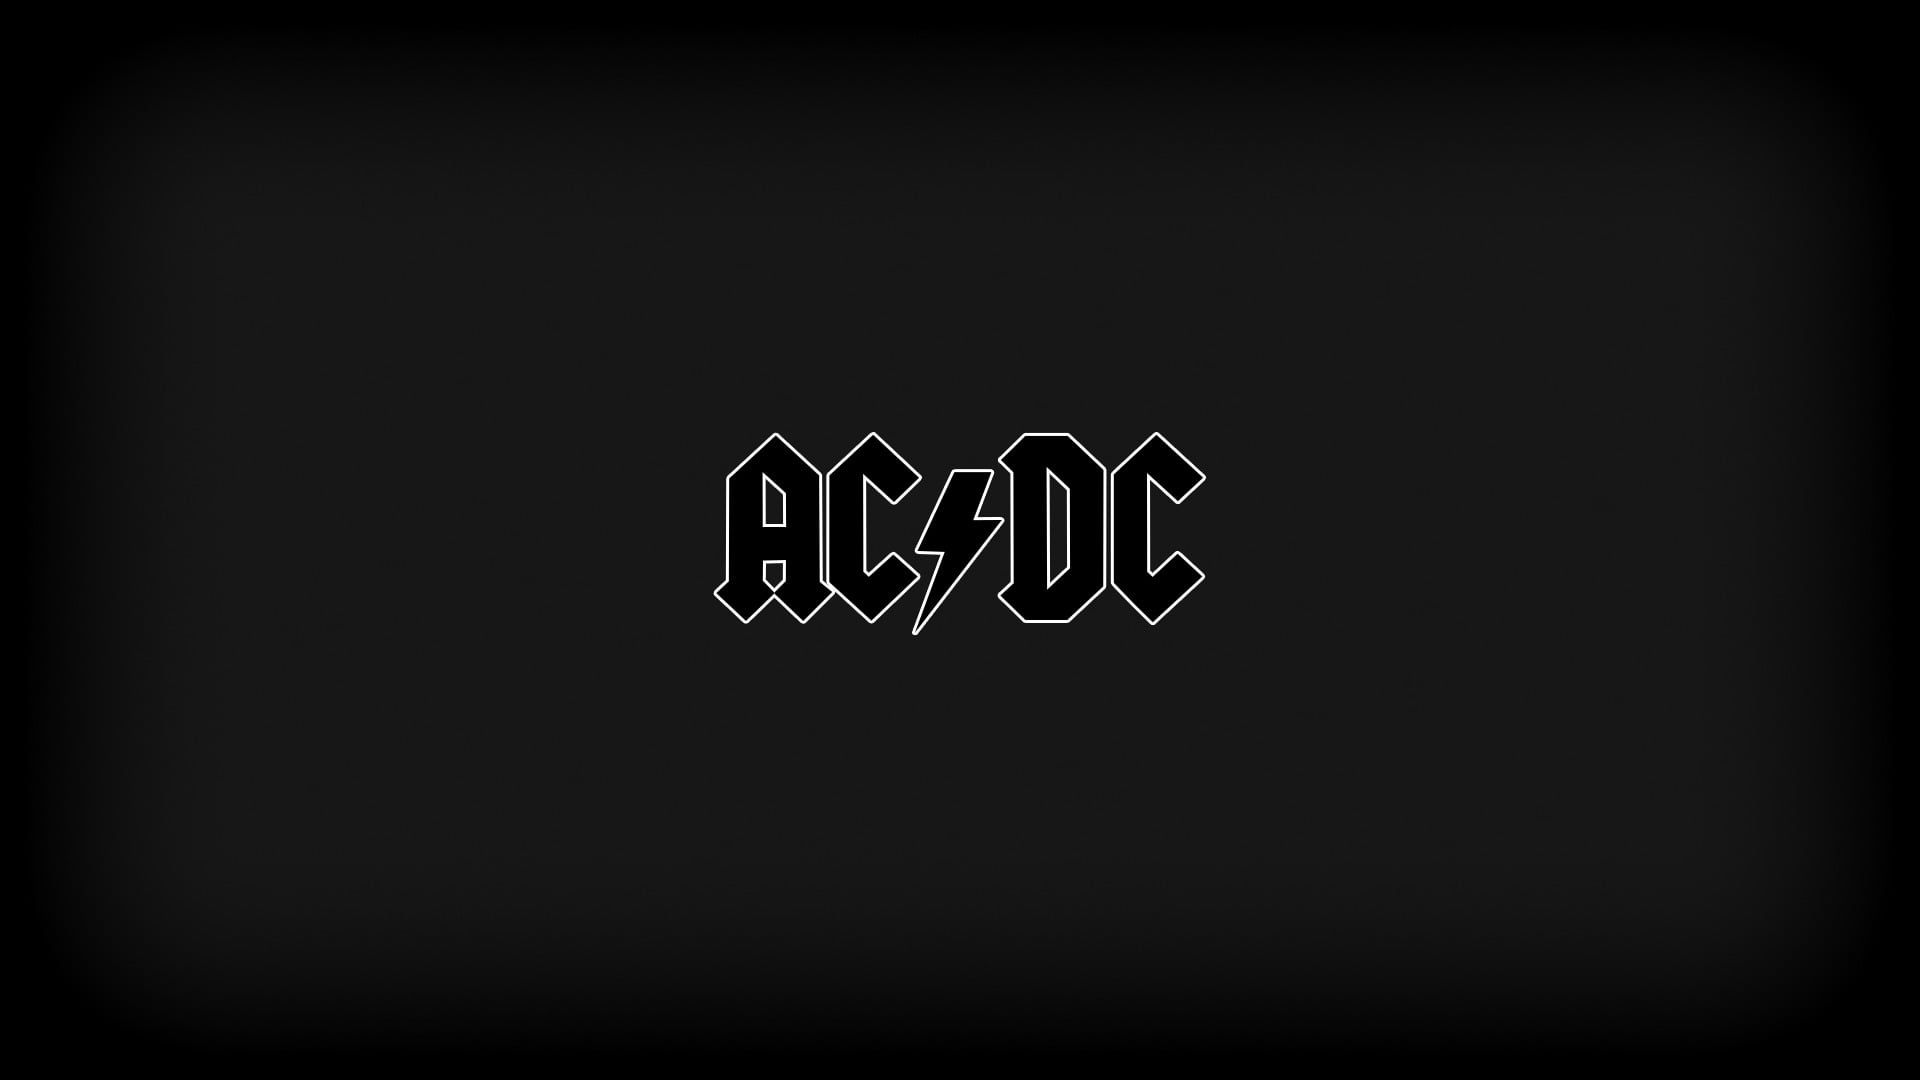 AC DC Logo On Black Background #acdc #AC DC #rock P